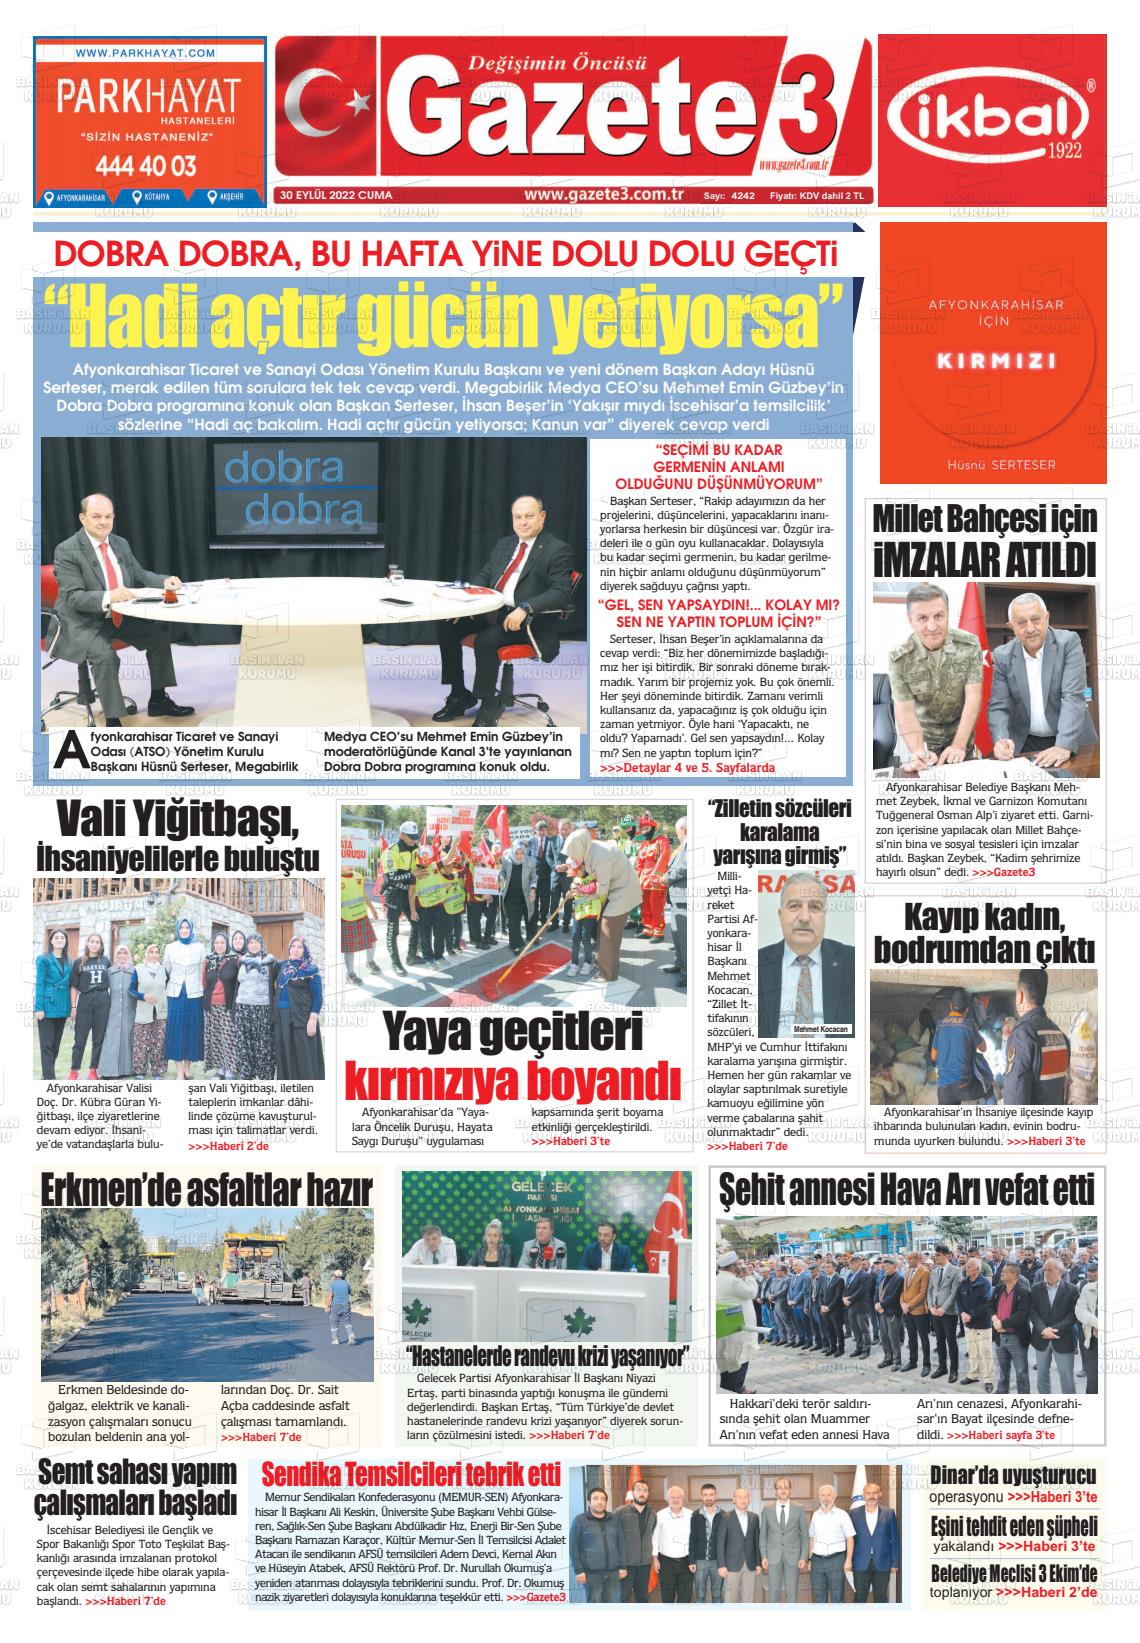 30 Eylül 2022 Gazete 3 Gazete Manşeti